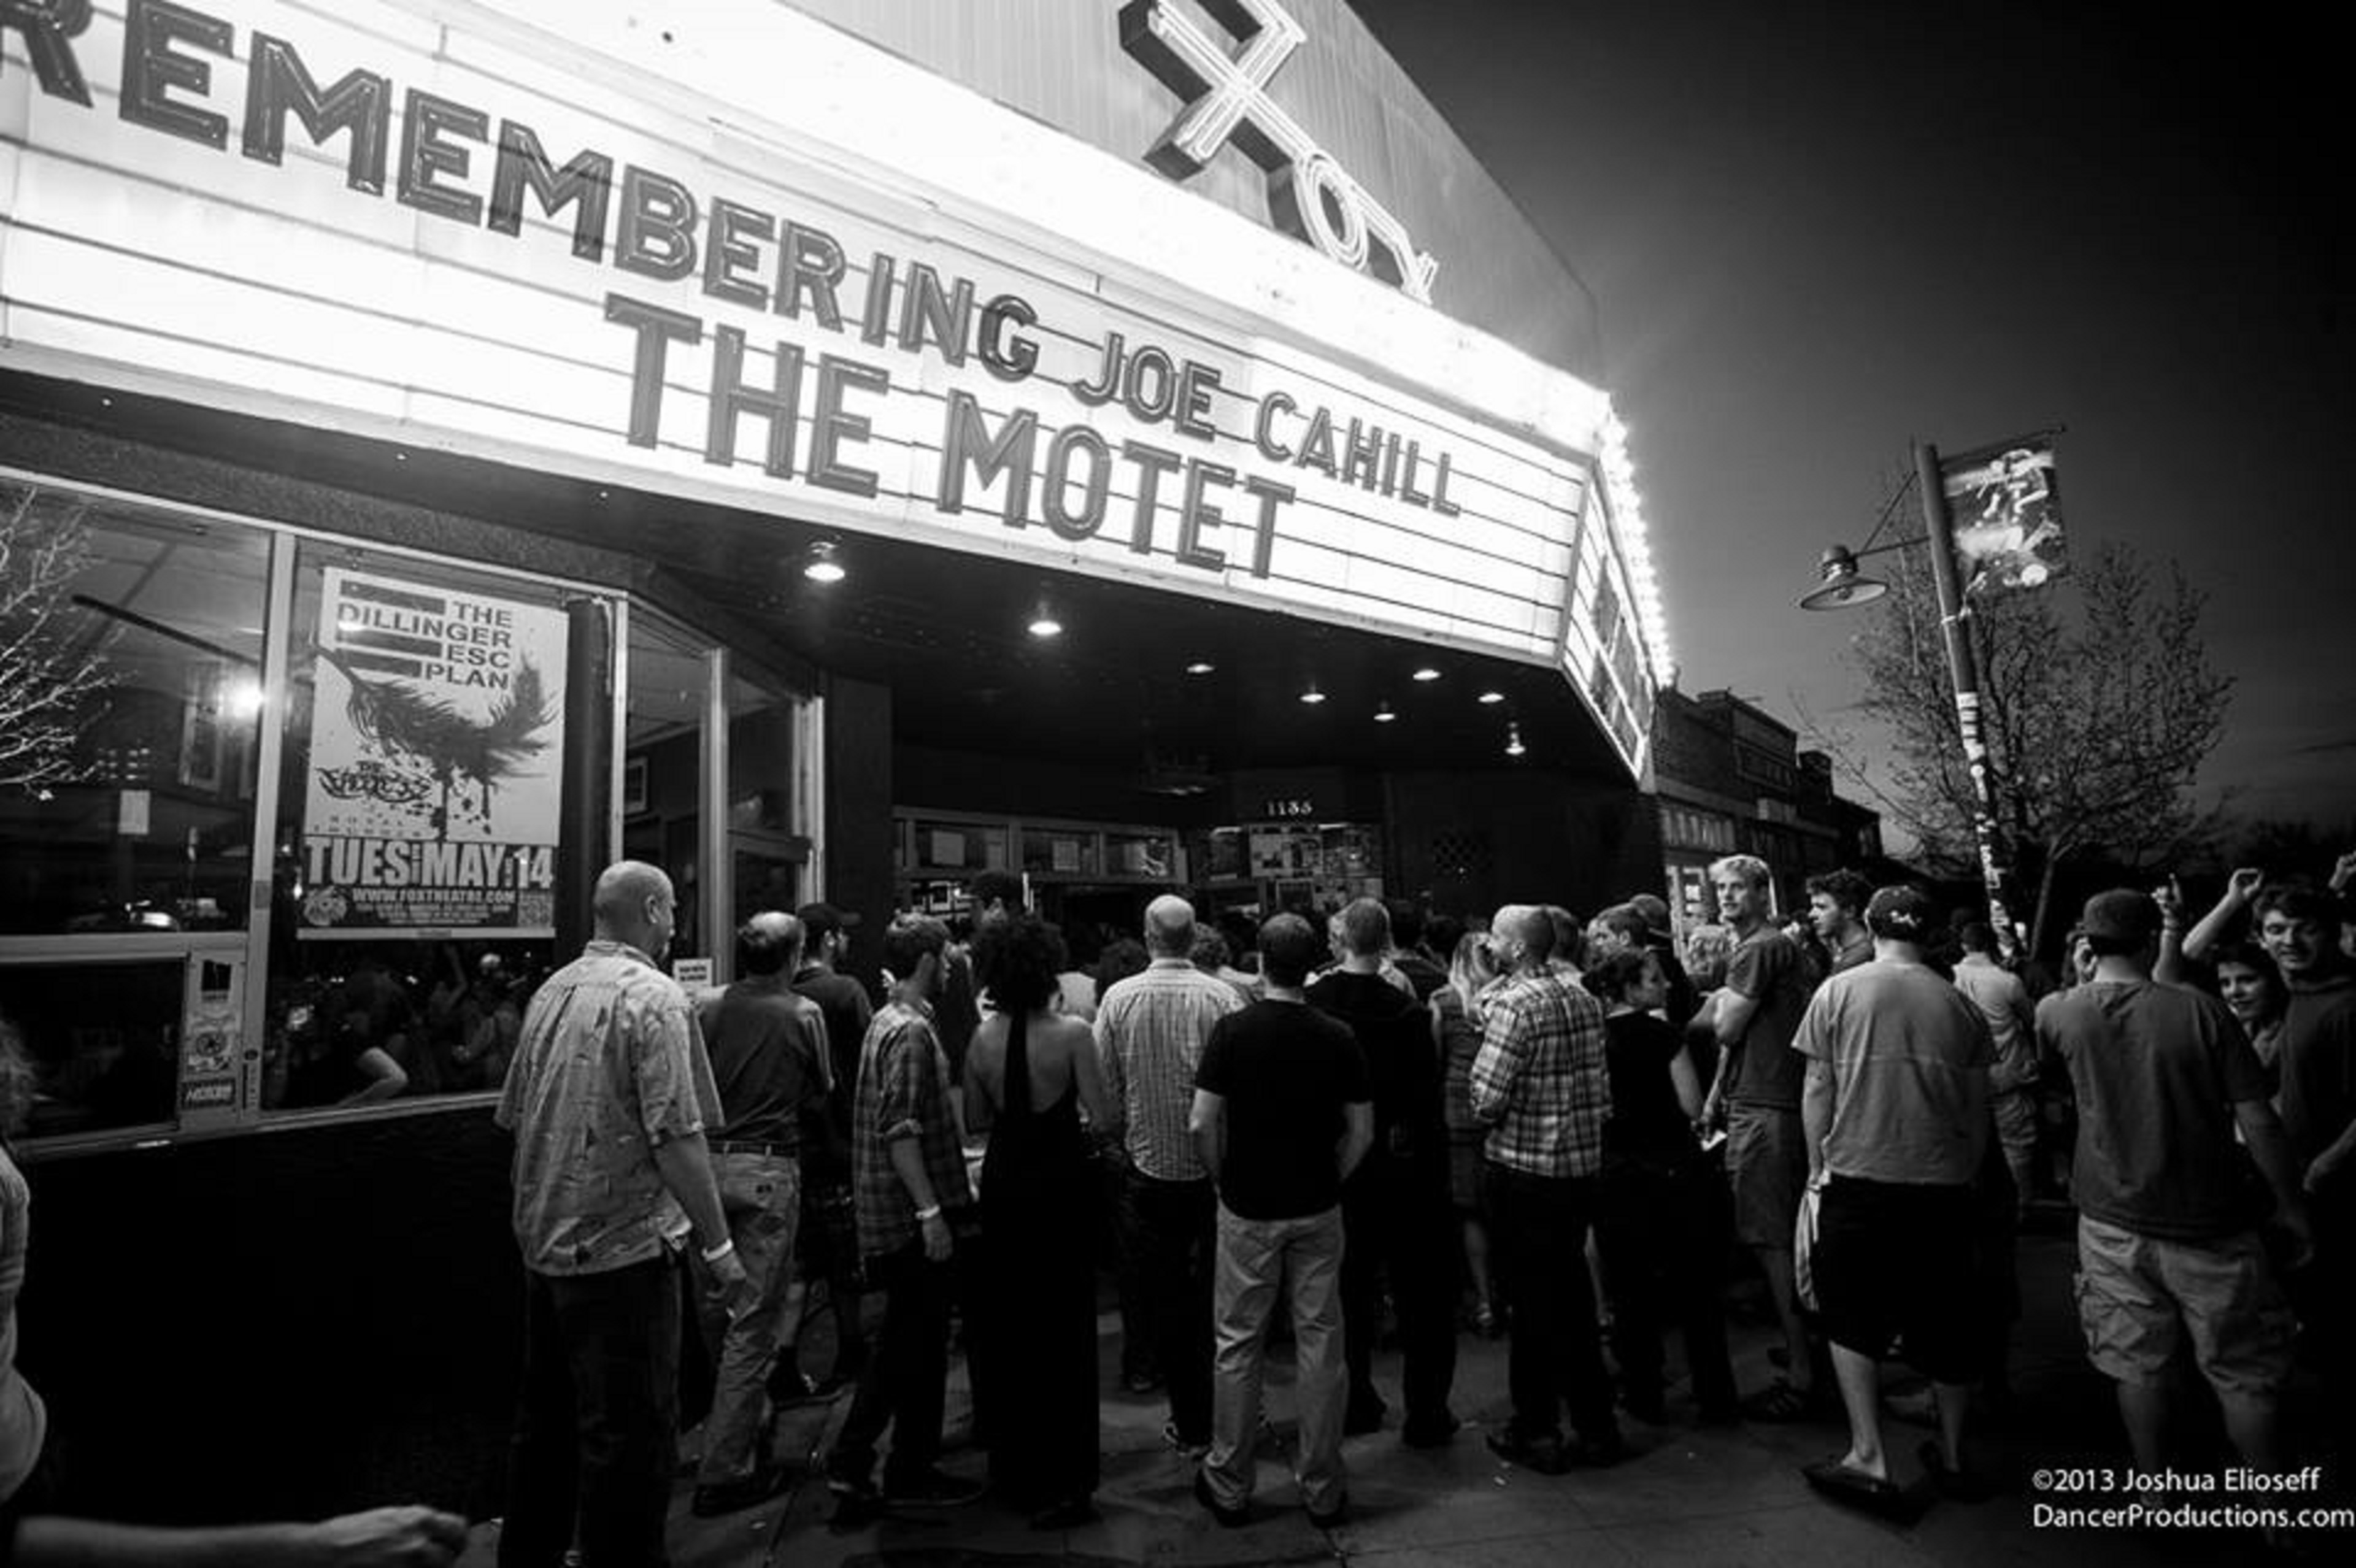 Joe Cahill Benefit Show | Fox Theater | 5/13/13 | Review